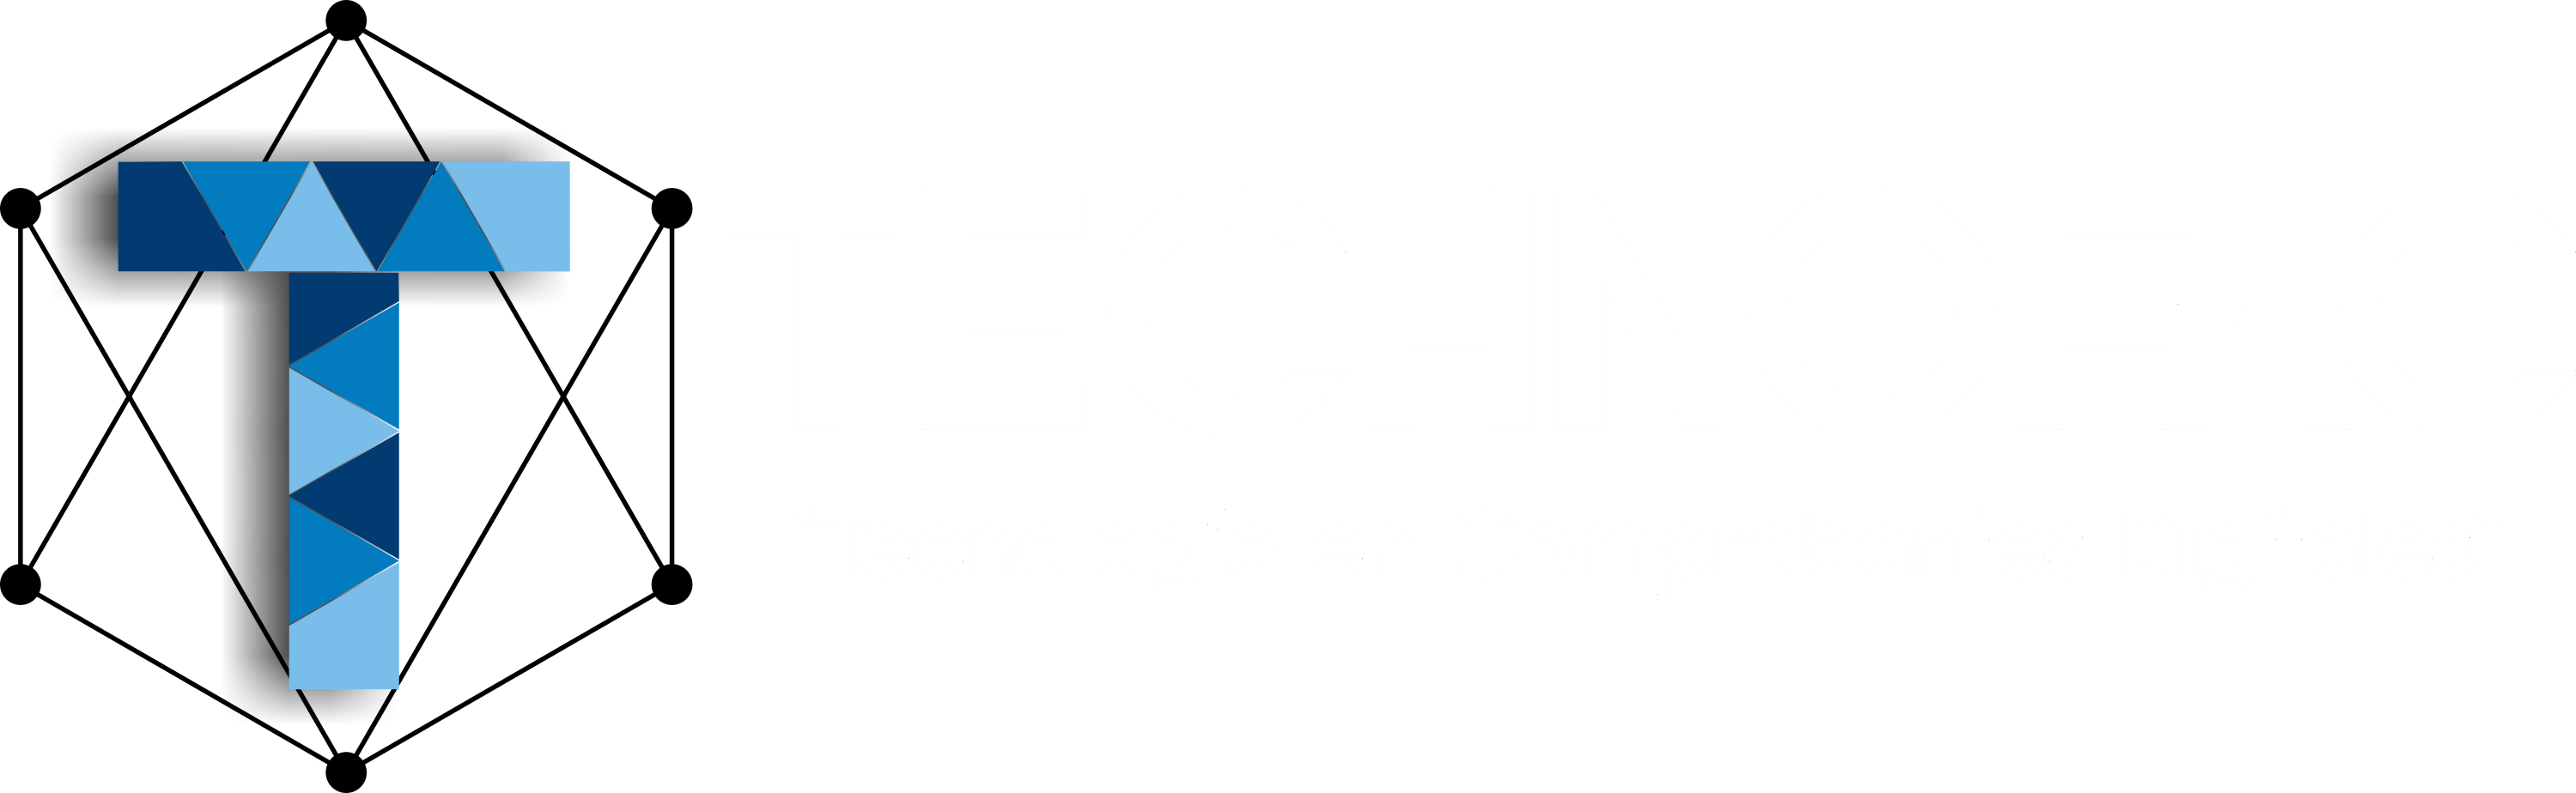 Technofac